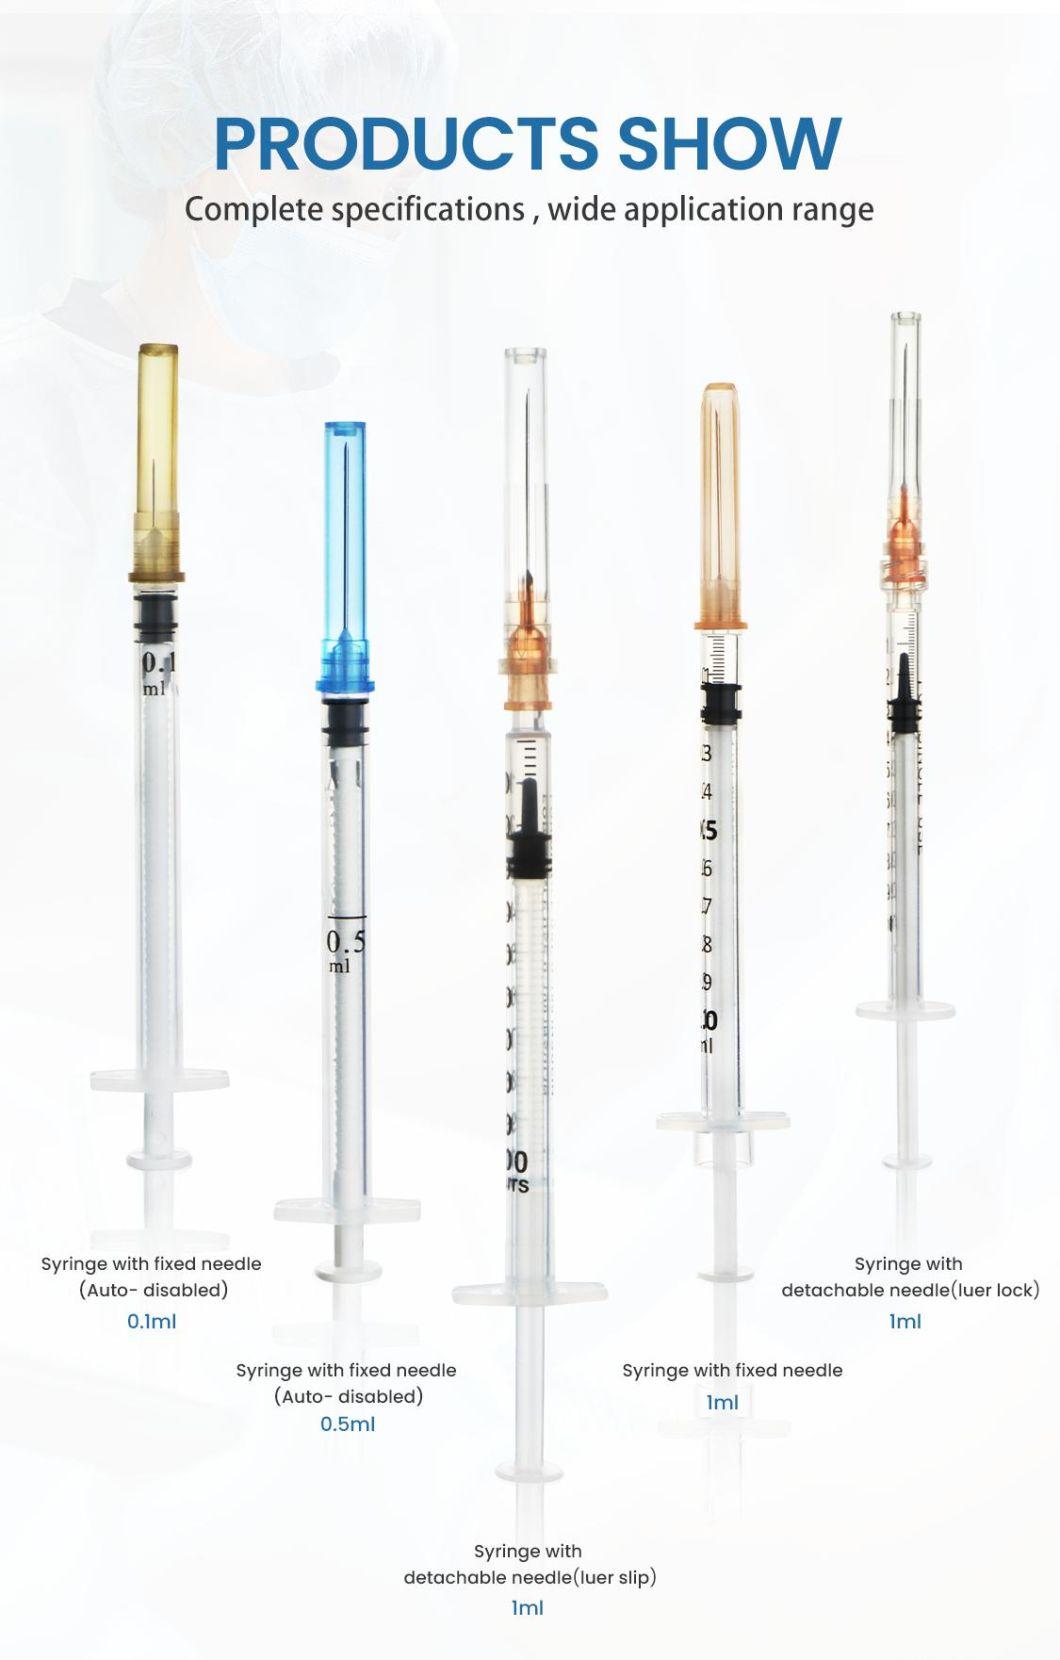 Wego Sterile Disposable Plastic Syringe with Needle Syringe for Vaccines